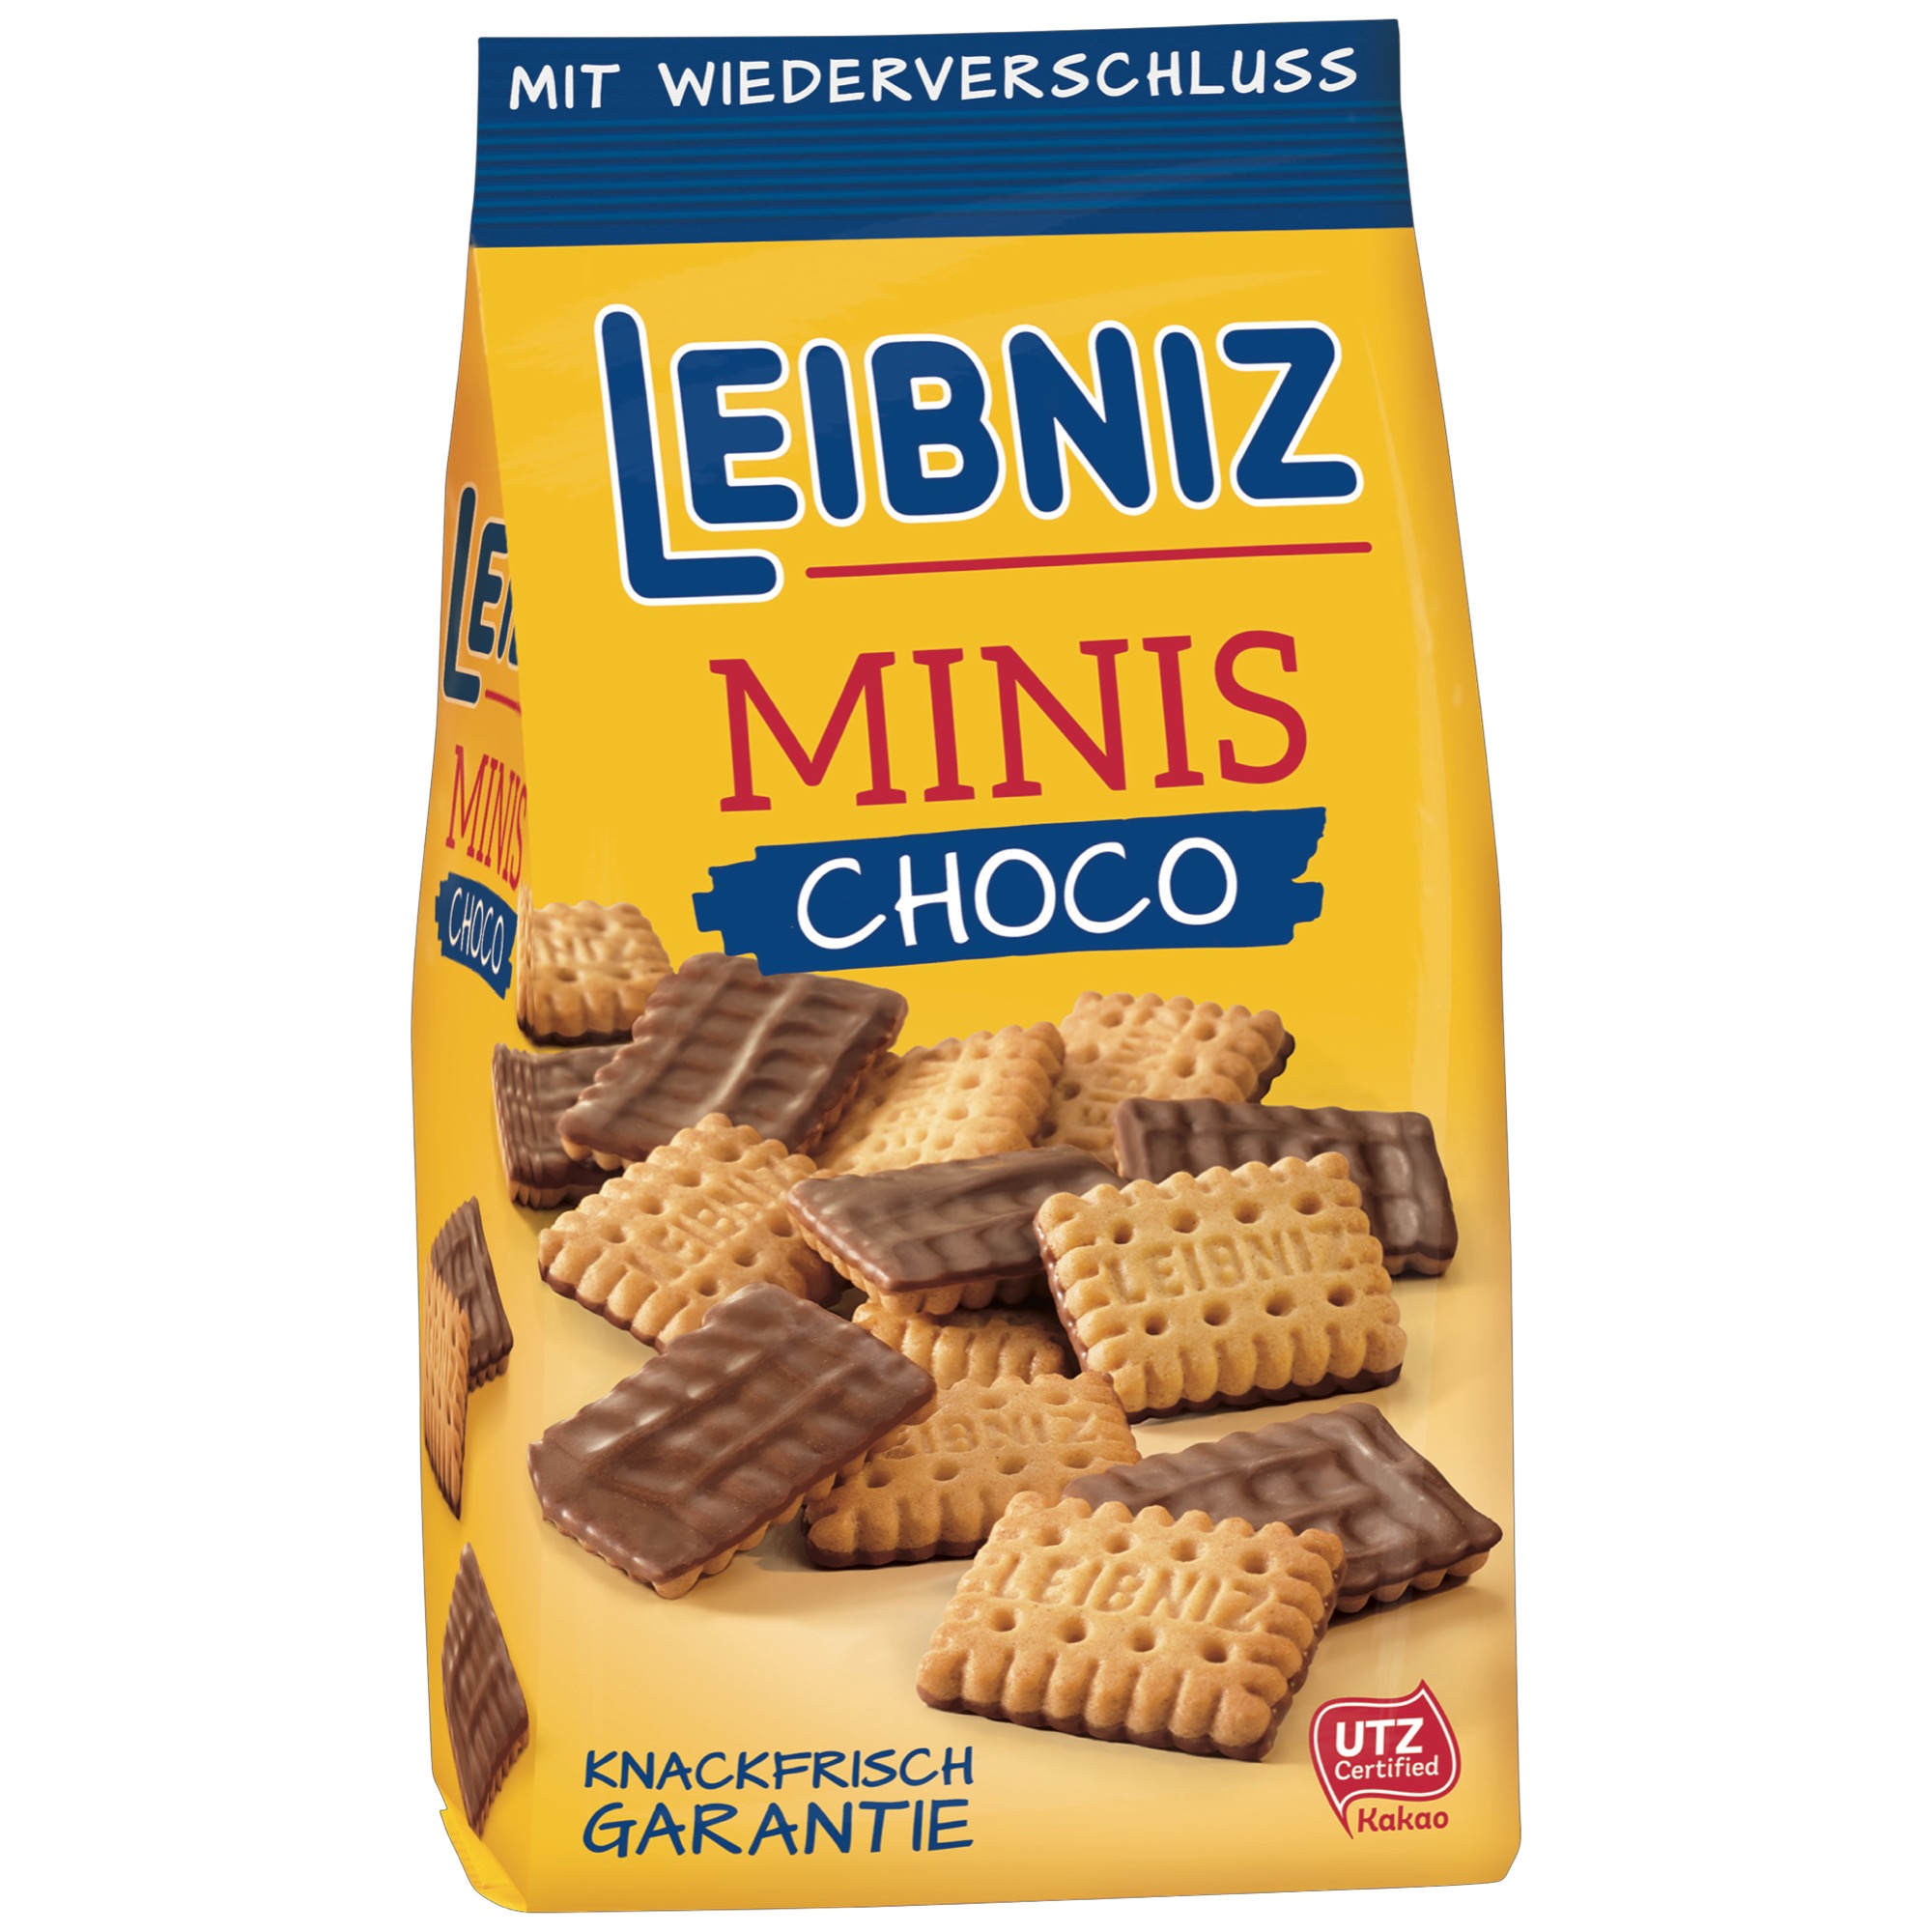 Leibniz Minis čokoládové 125g